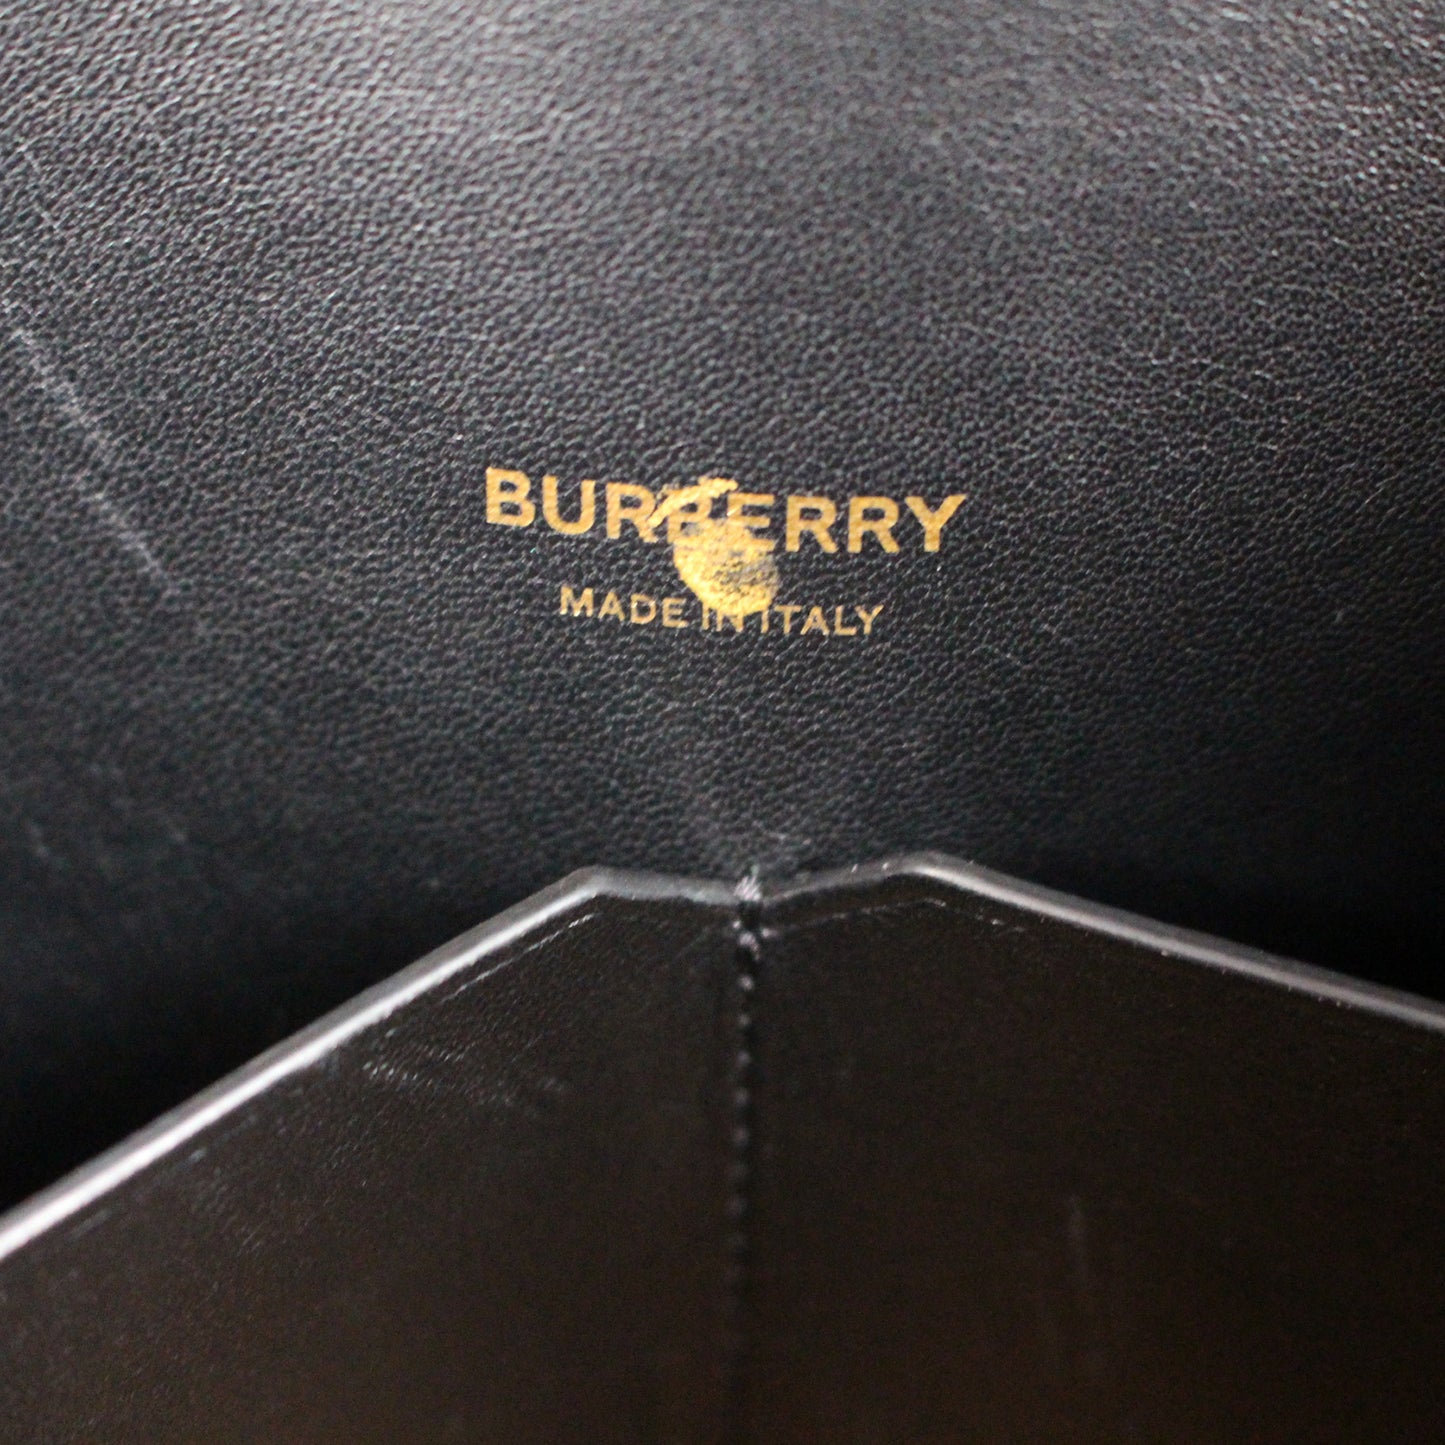 Burberry Society Check Canvas Bag